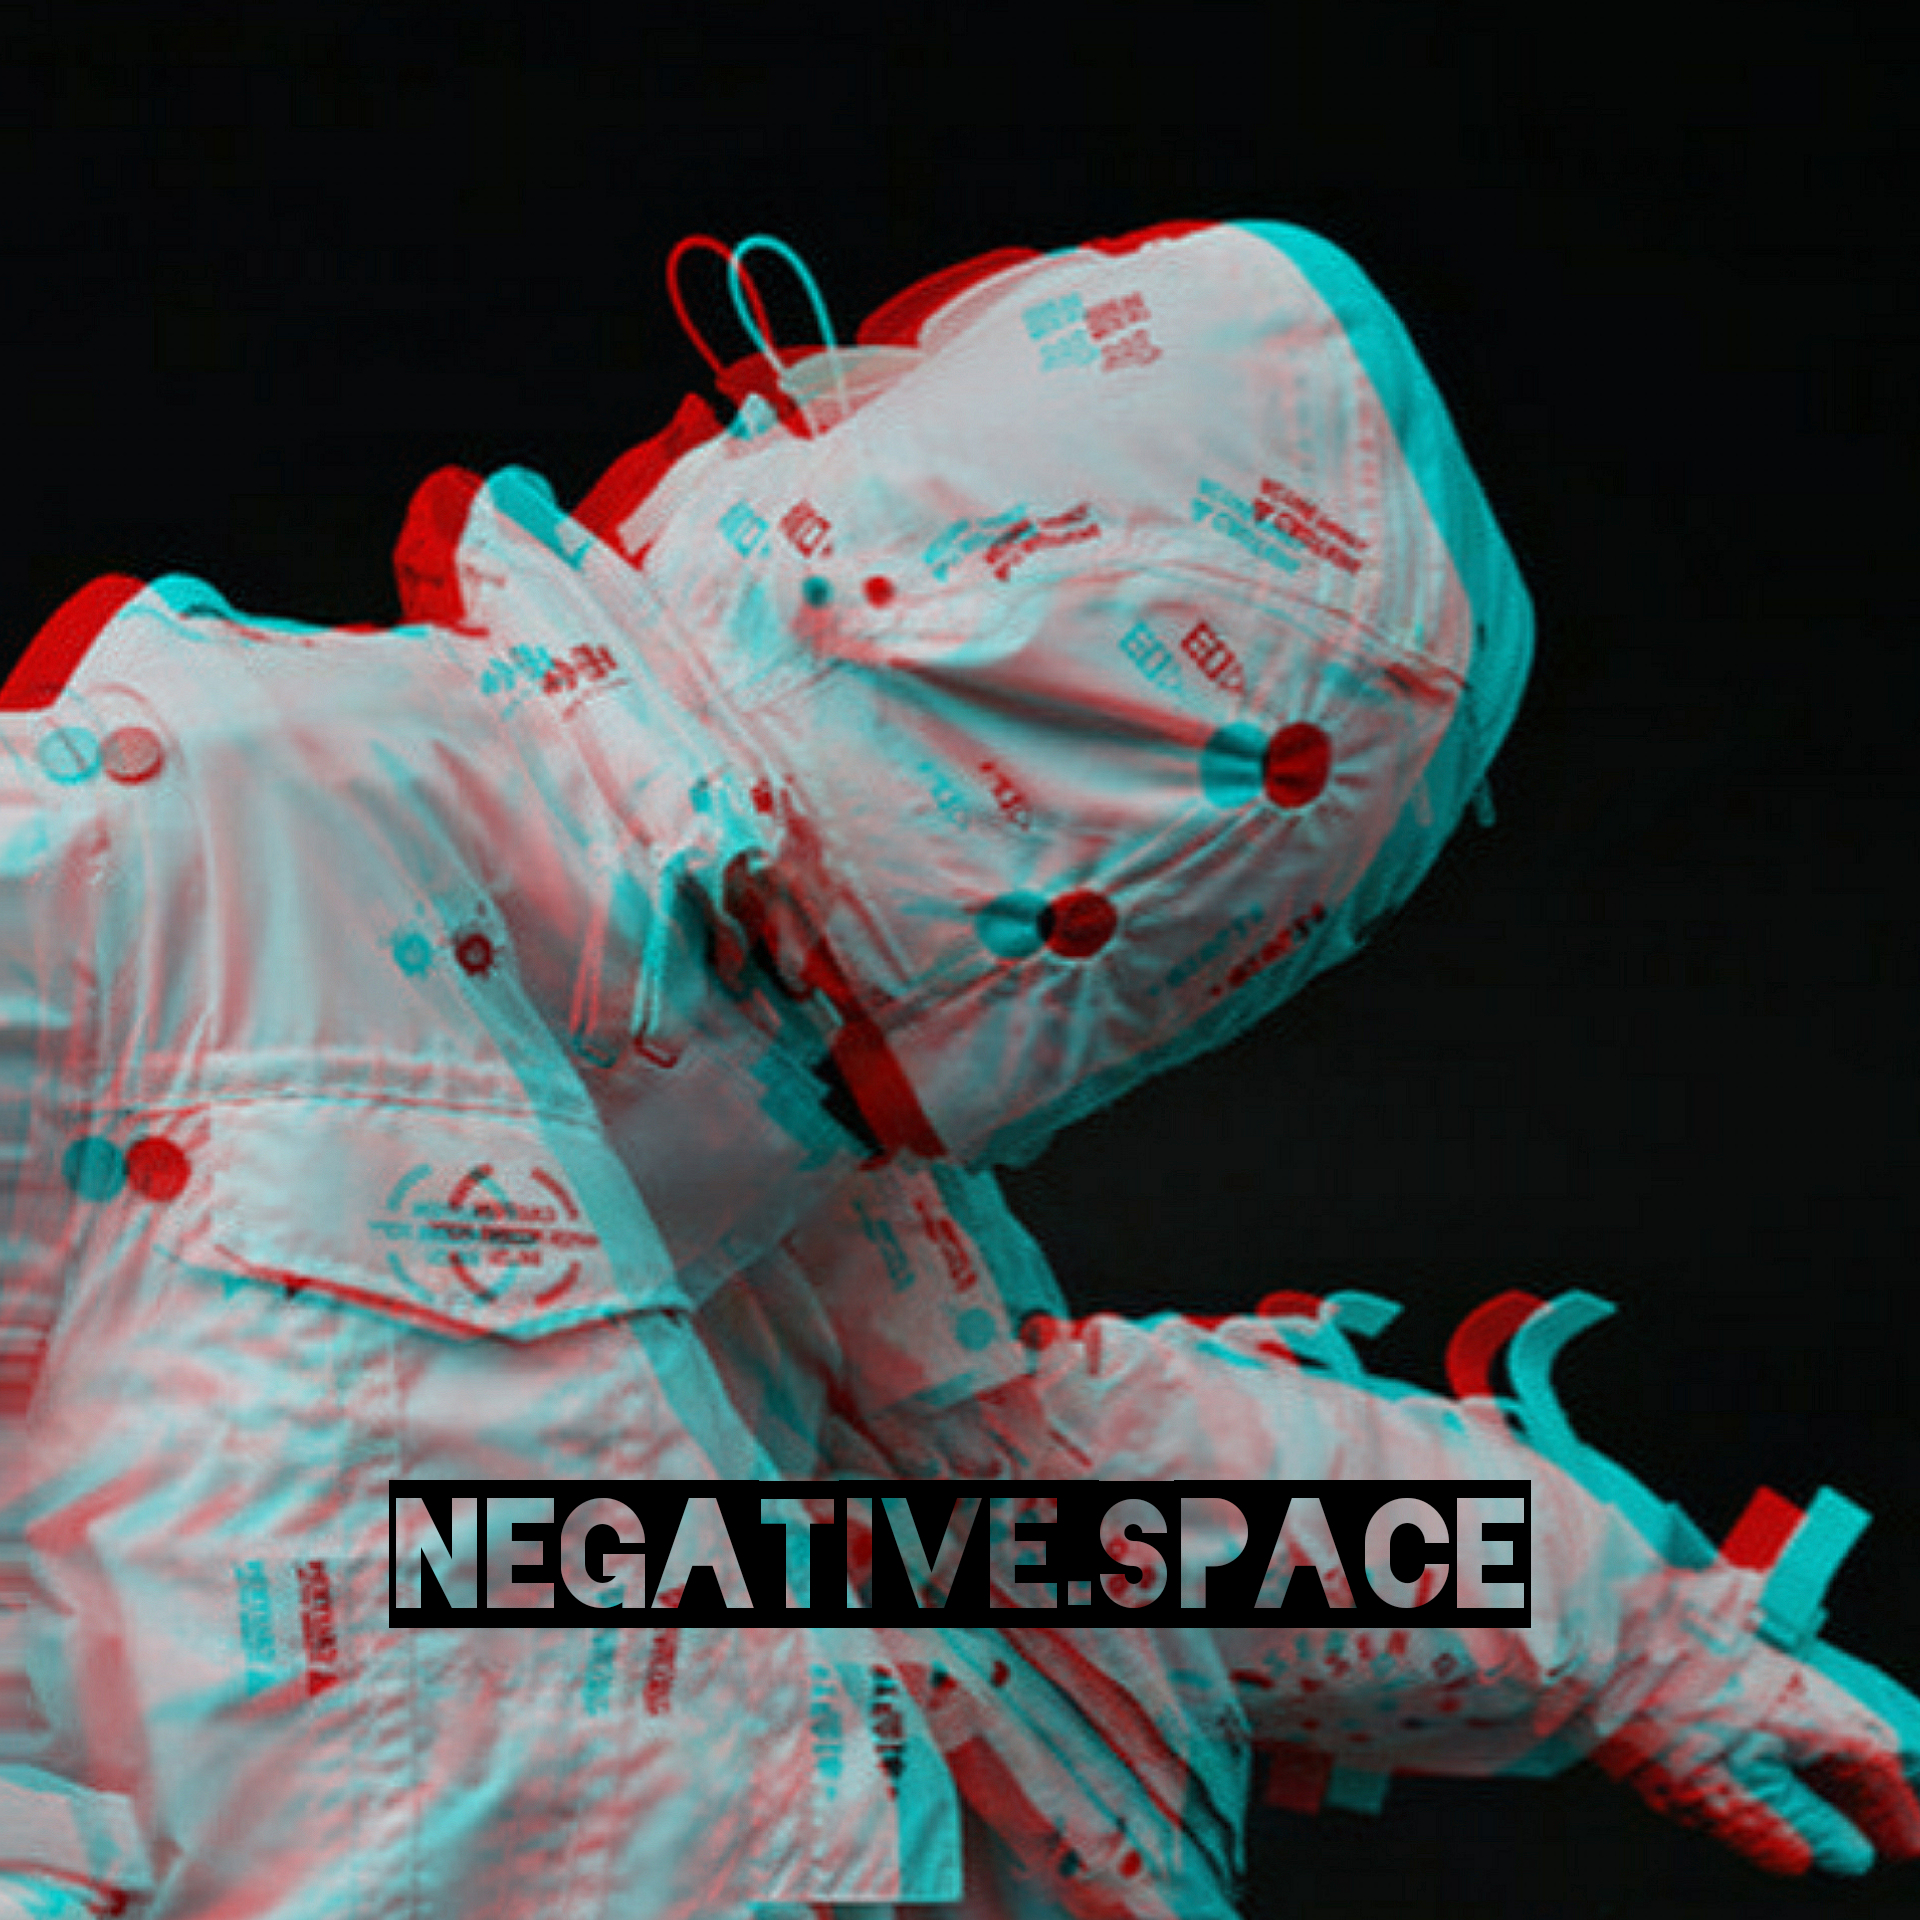 Negative.Space